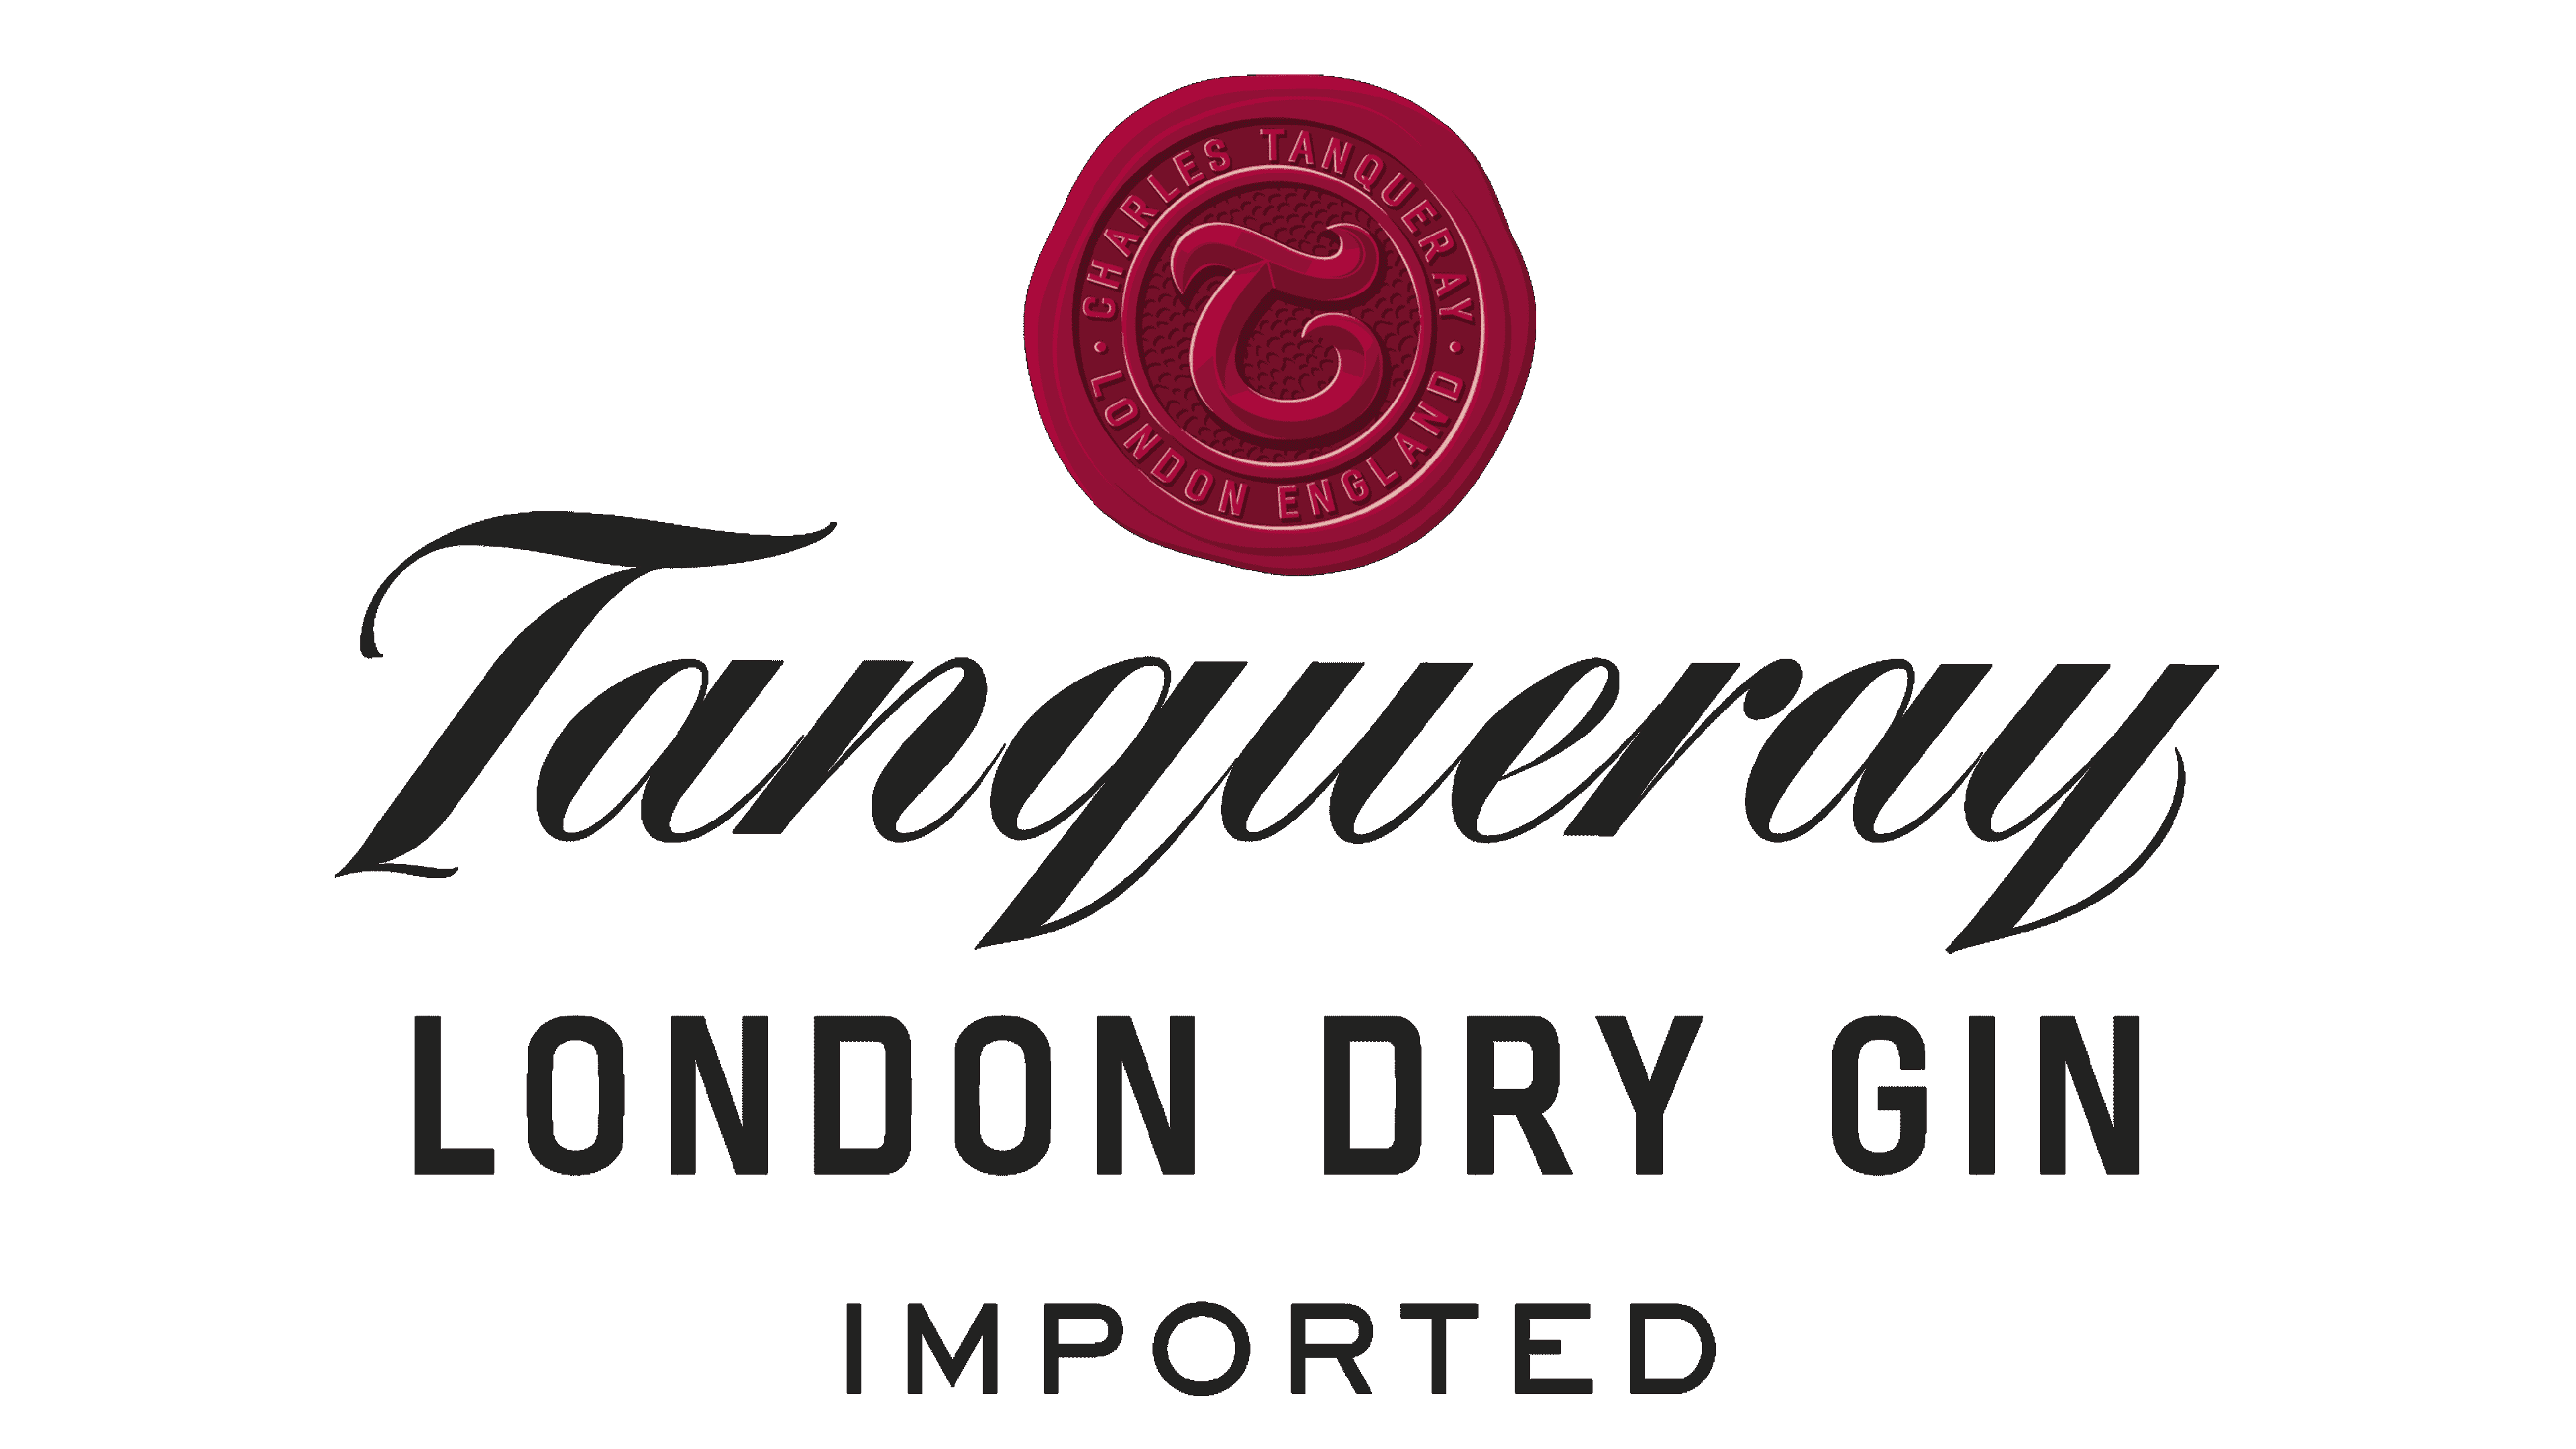 london dry gin brands logos